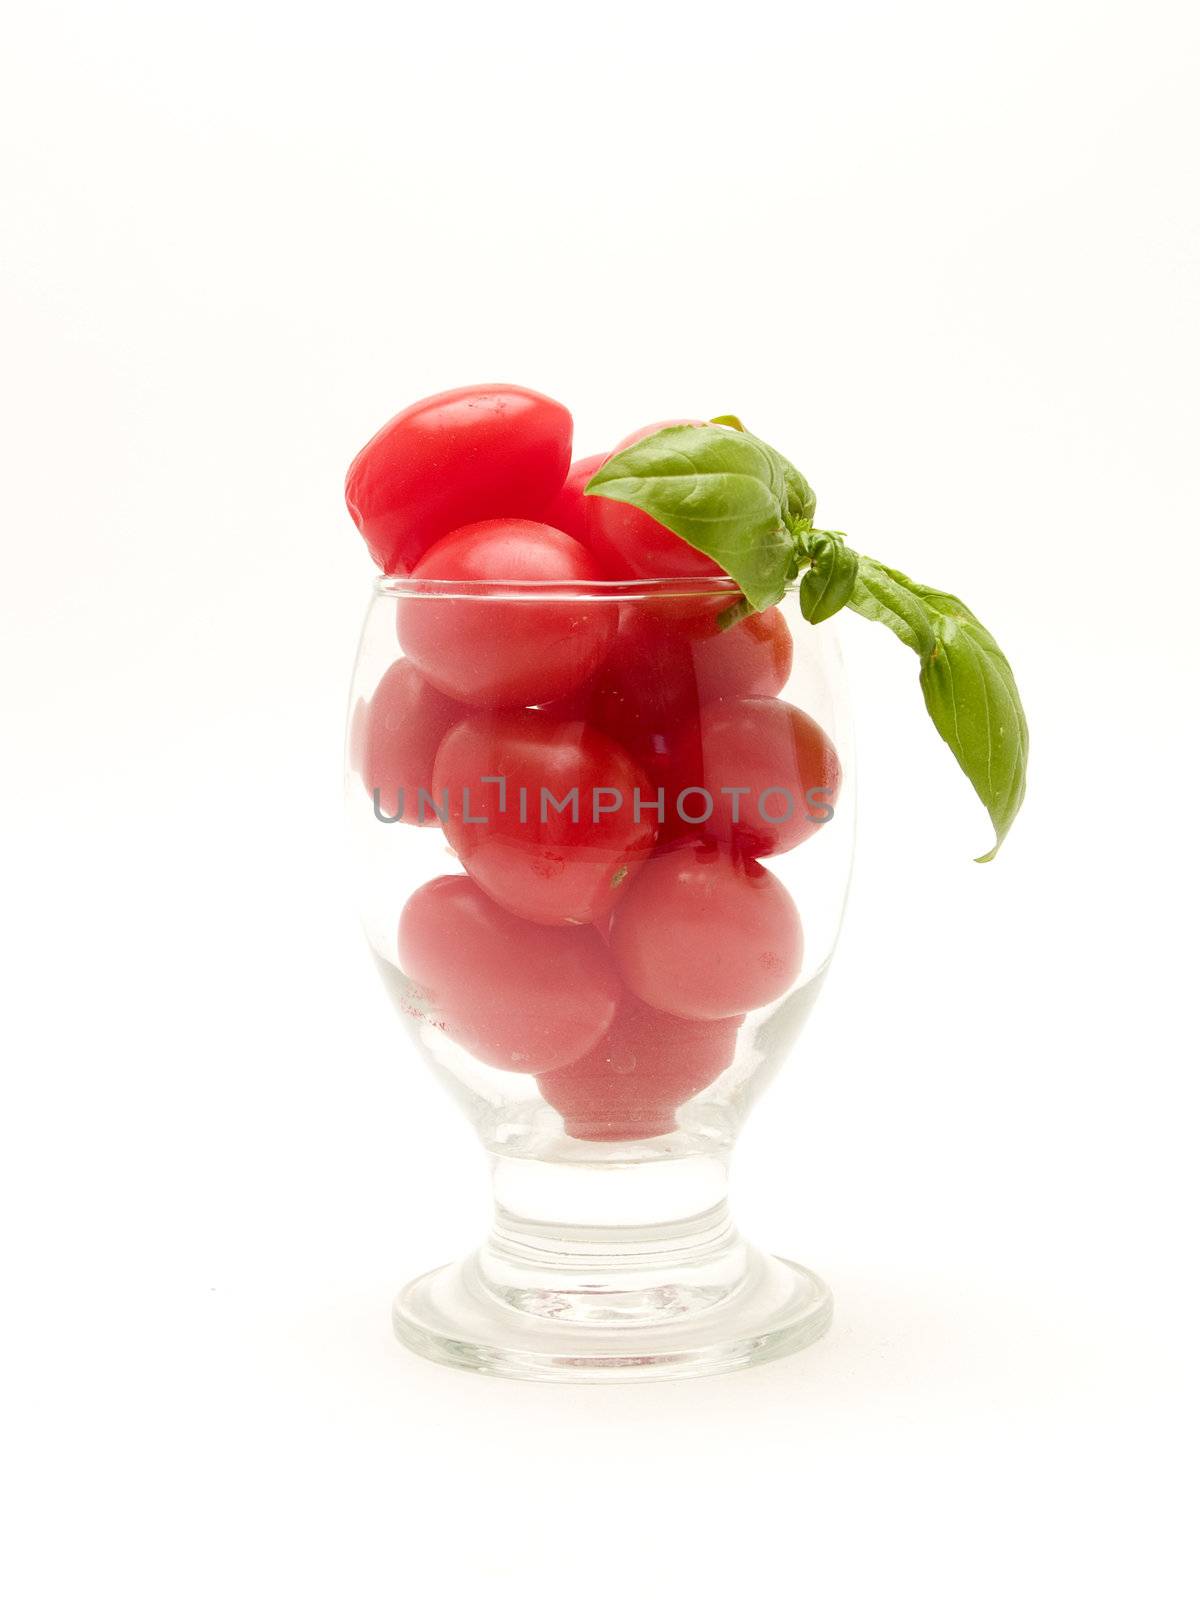 Tomato cherry group isolated on white background